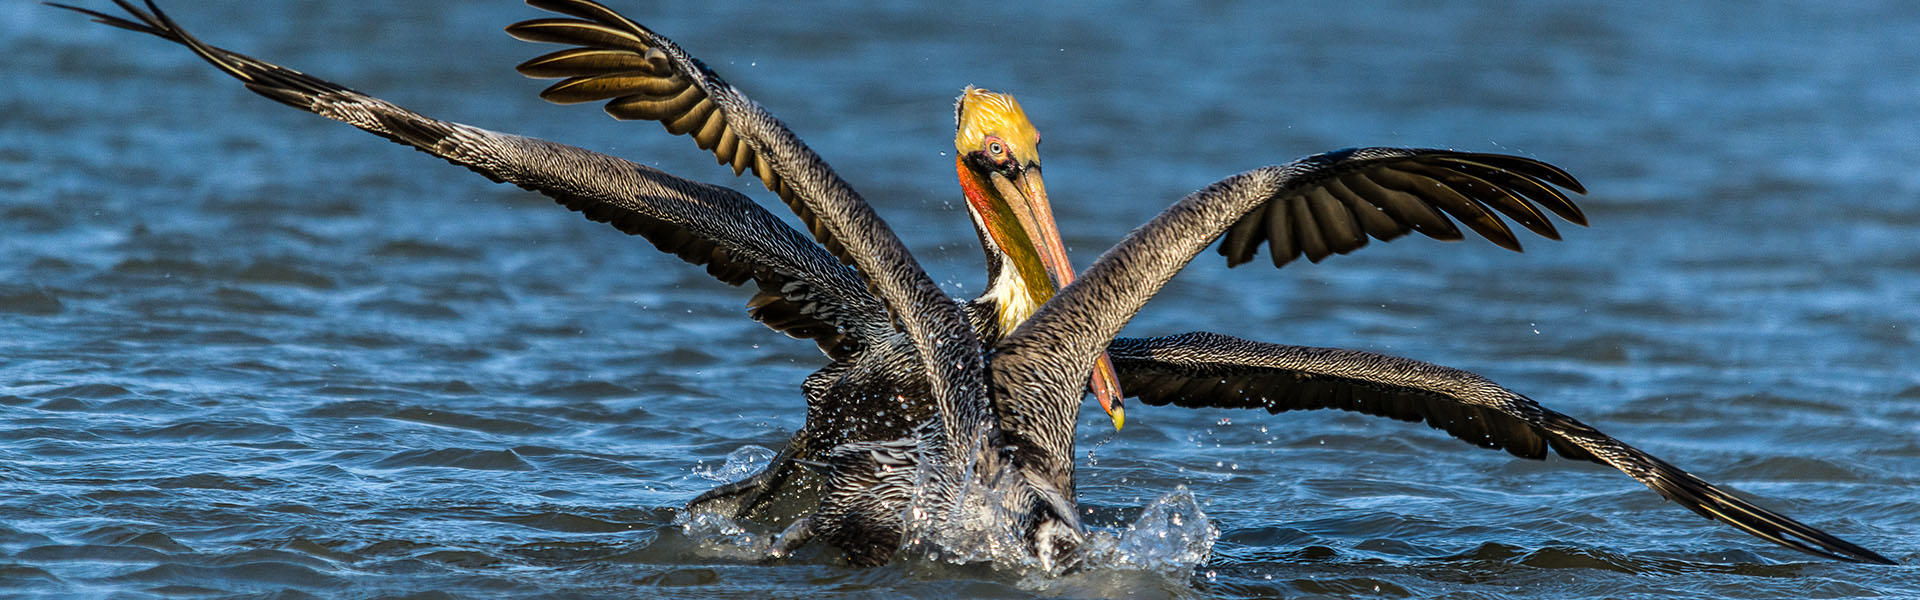 Brown Pelicans in Water